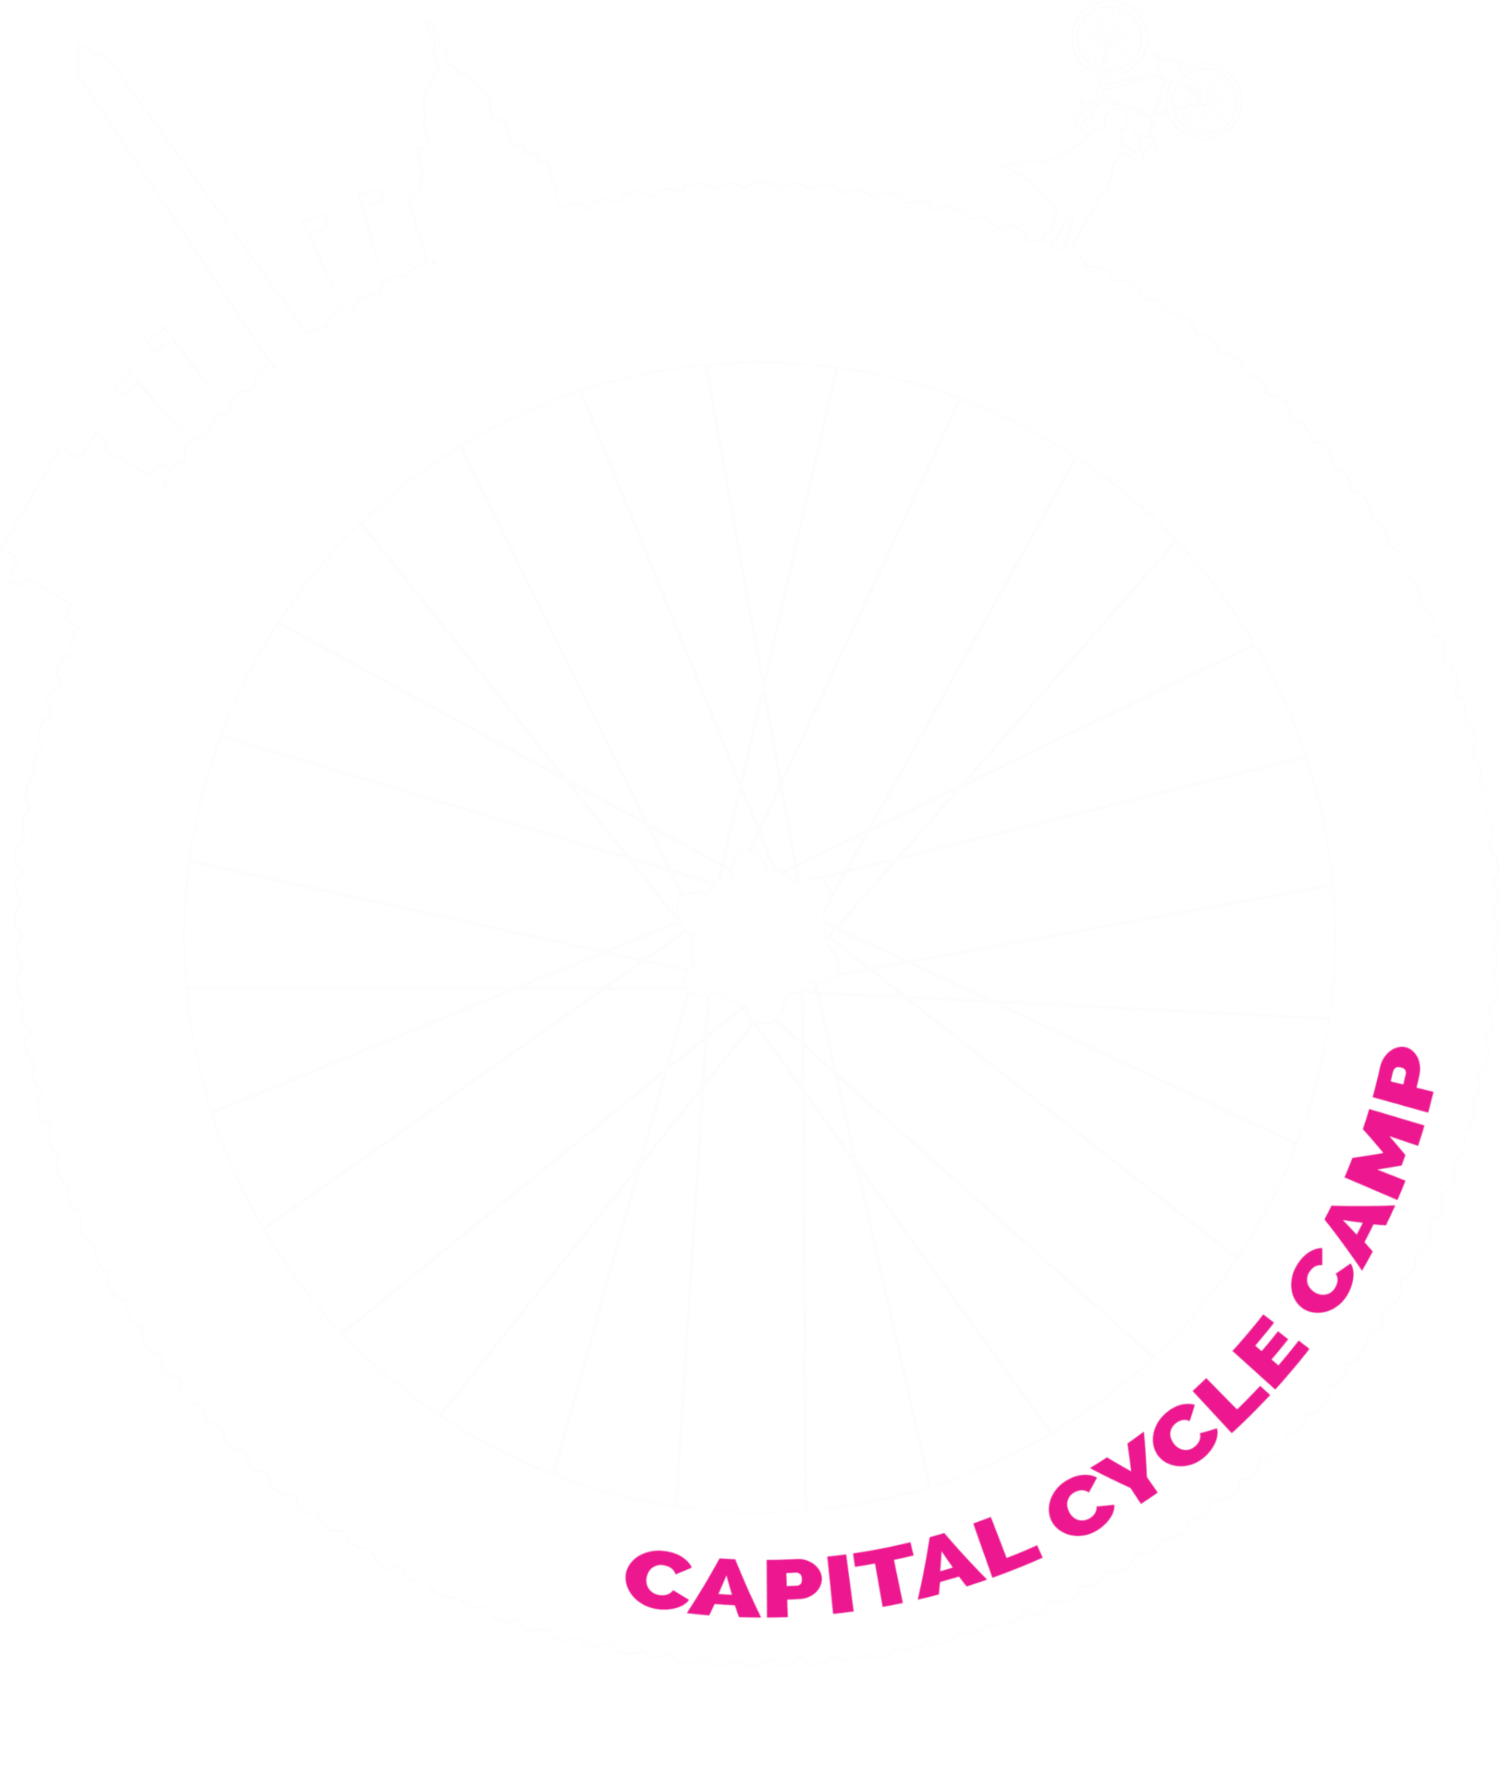 Capital Cycle Camp